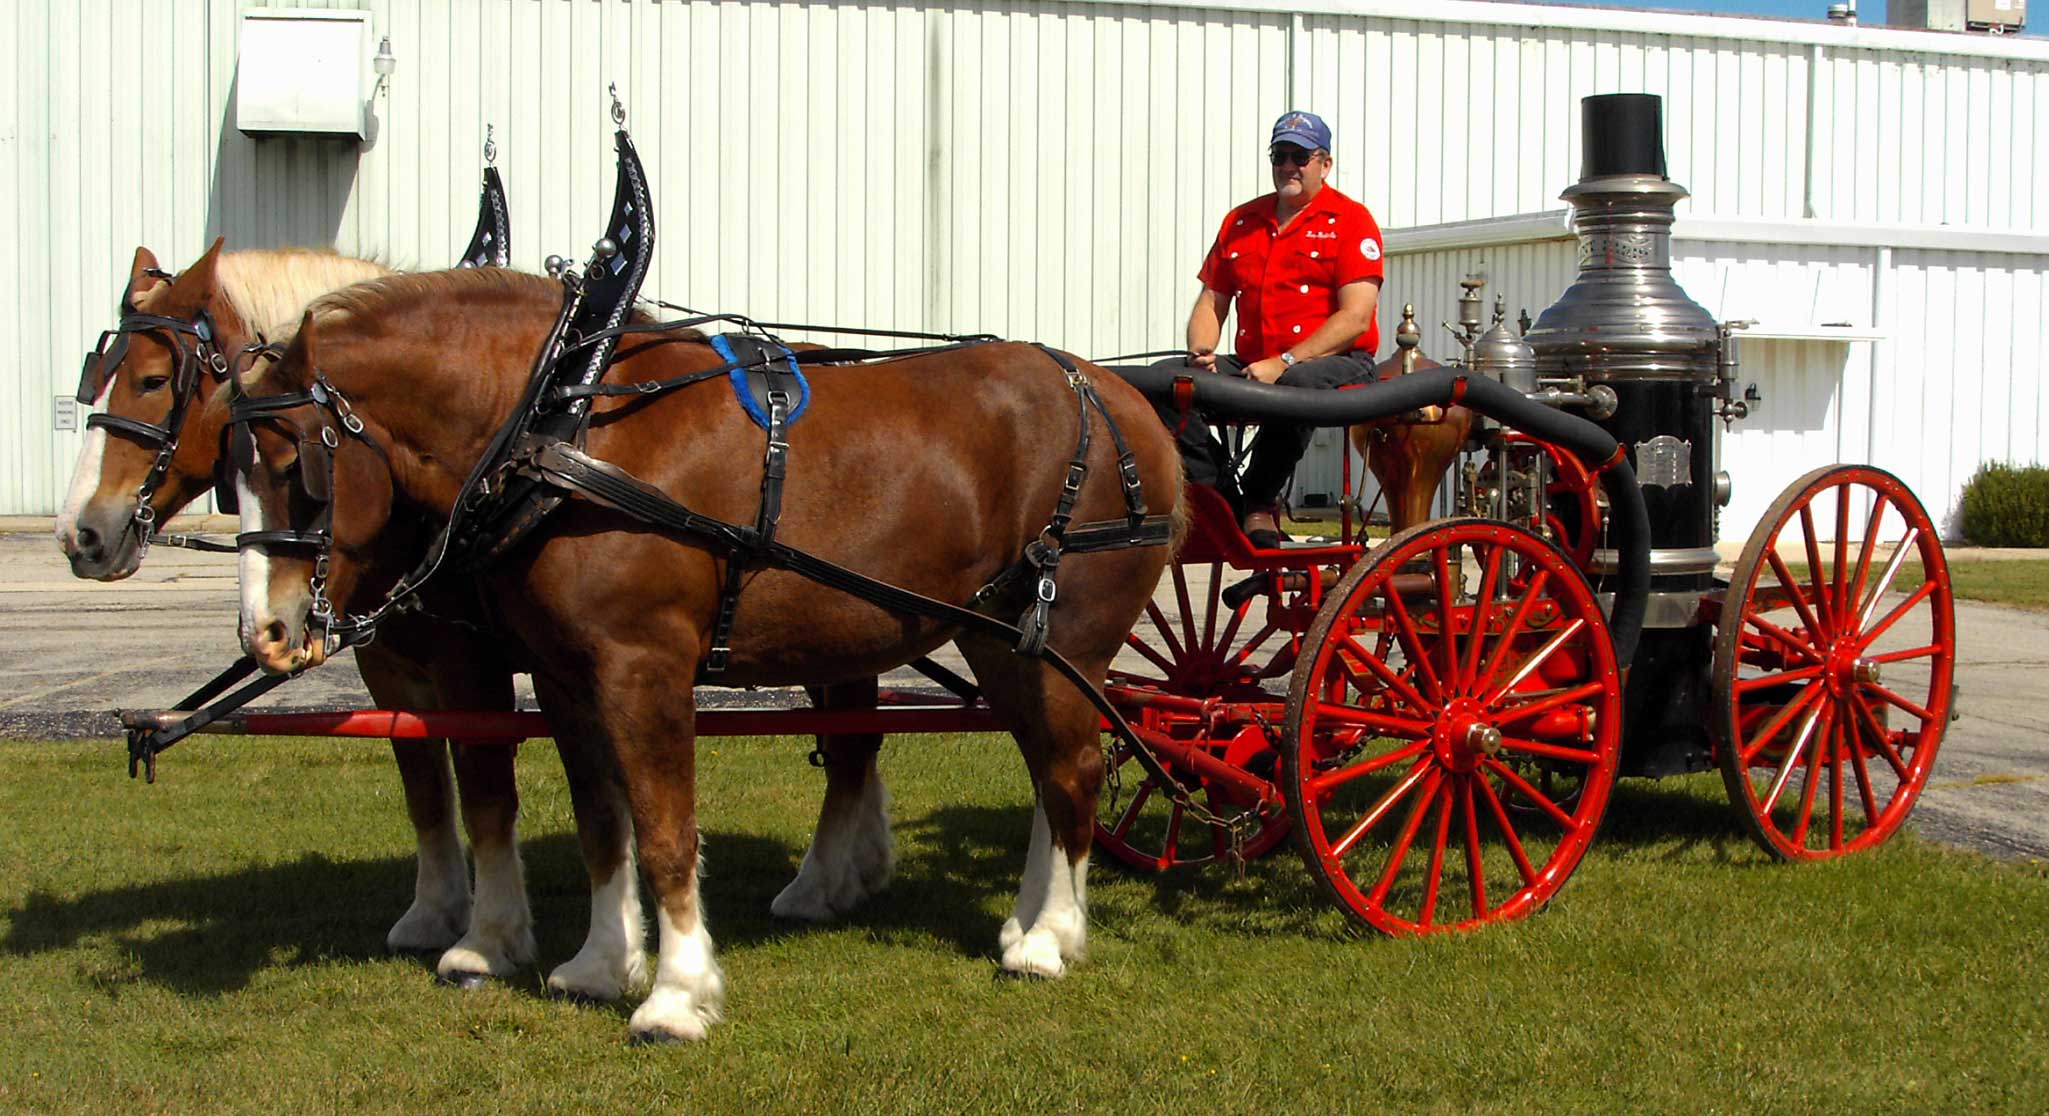 vehicles, horse drawn vehicle, fire engine